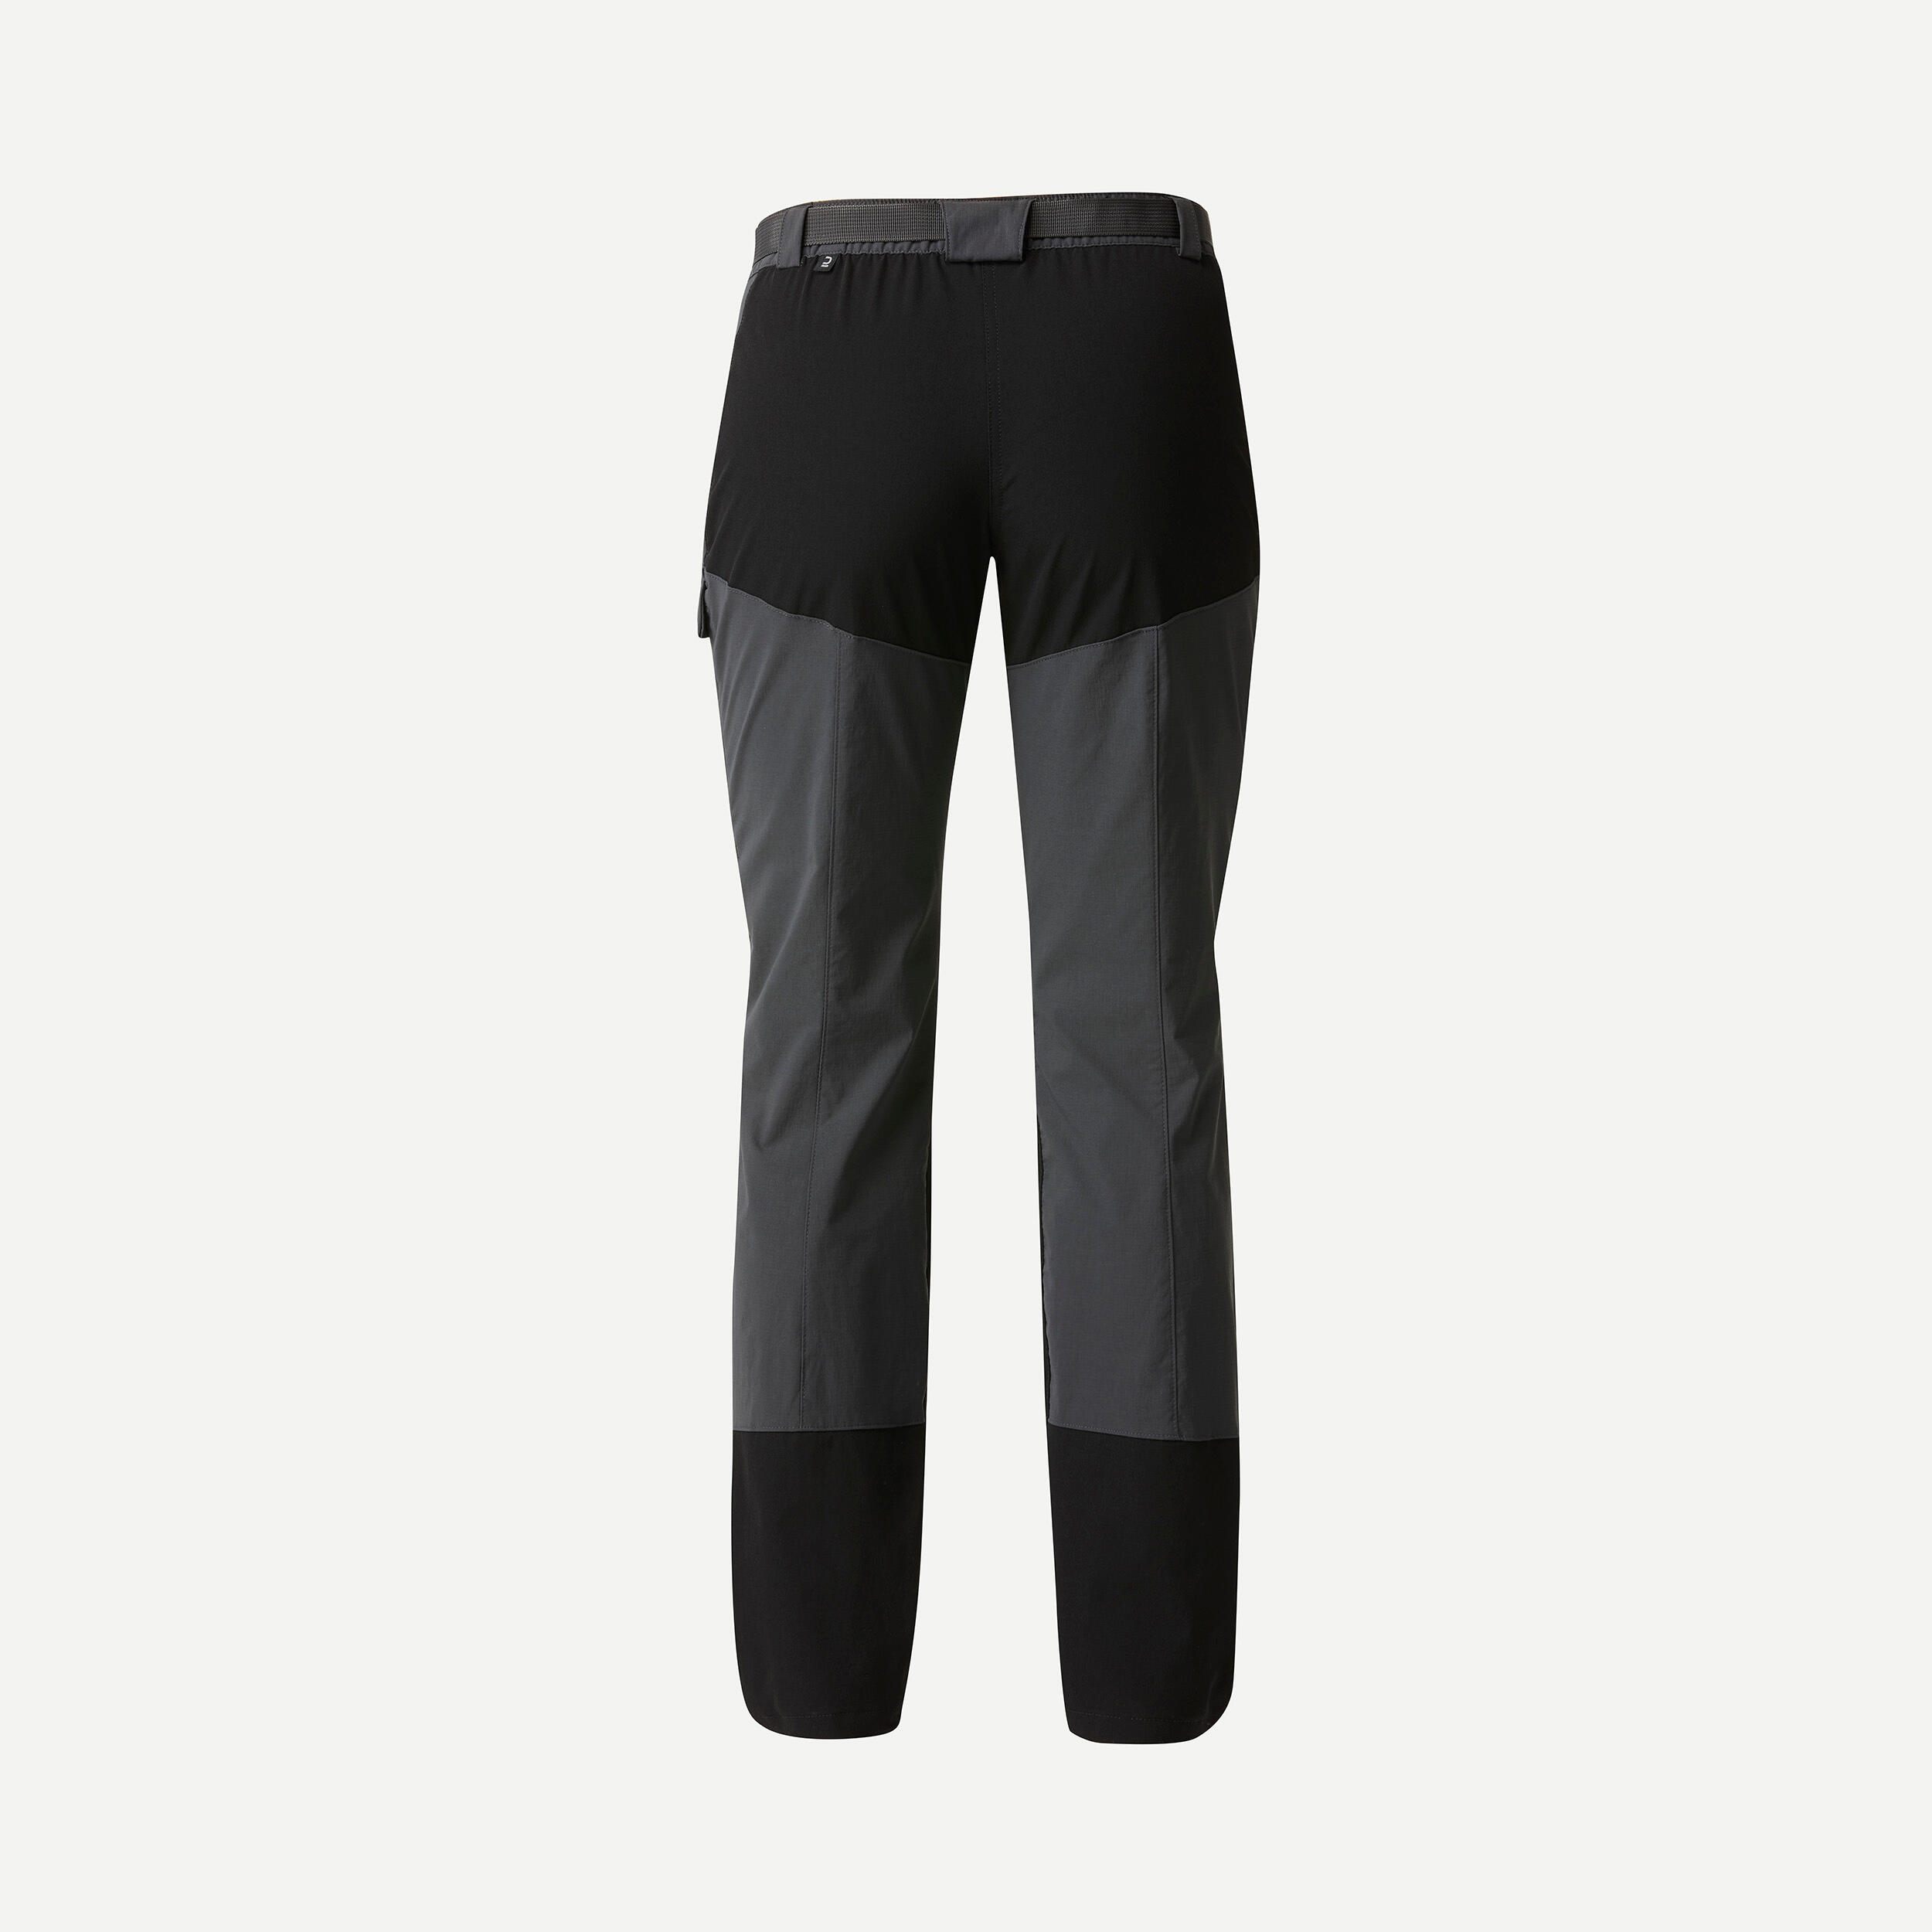 Women's Hiking Pants - MT 500 Grey - Carbon grey, Black, Carbon grey -  Forclaz - Decathlon